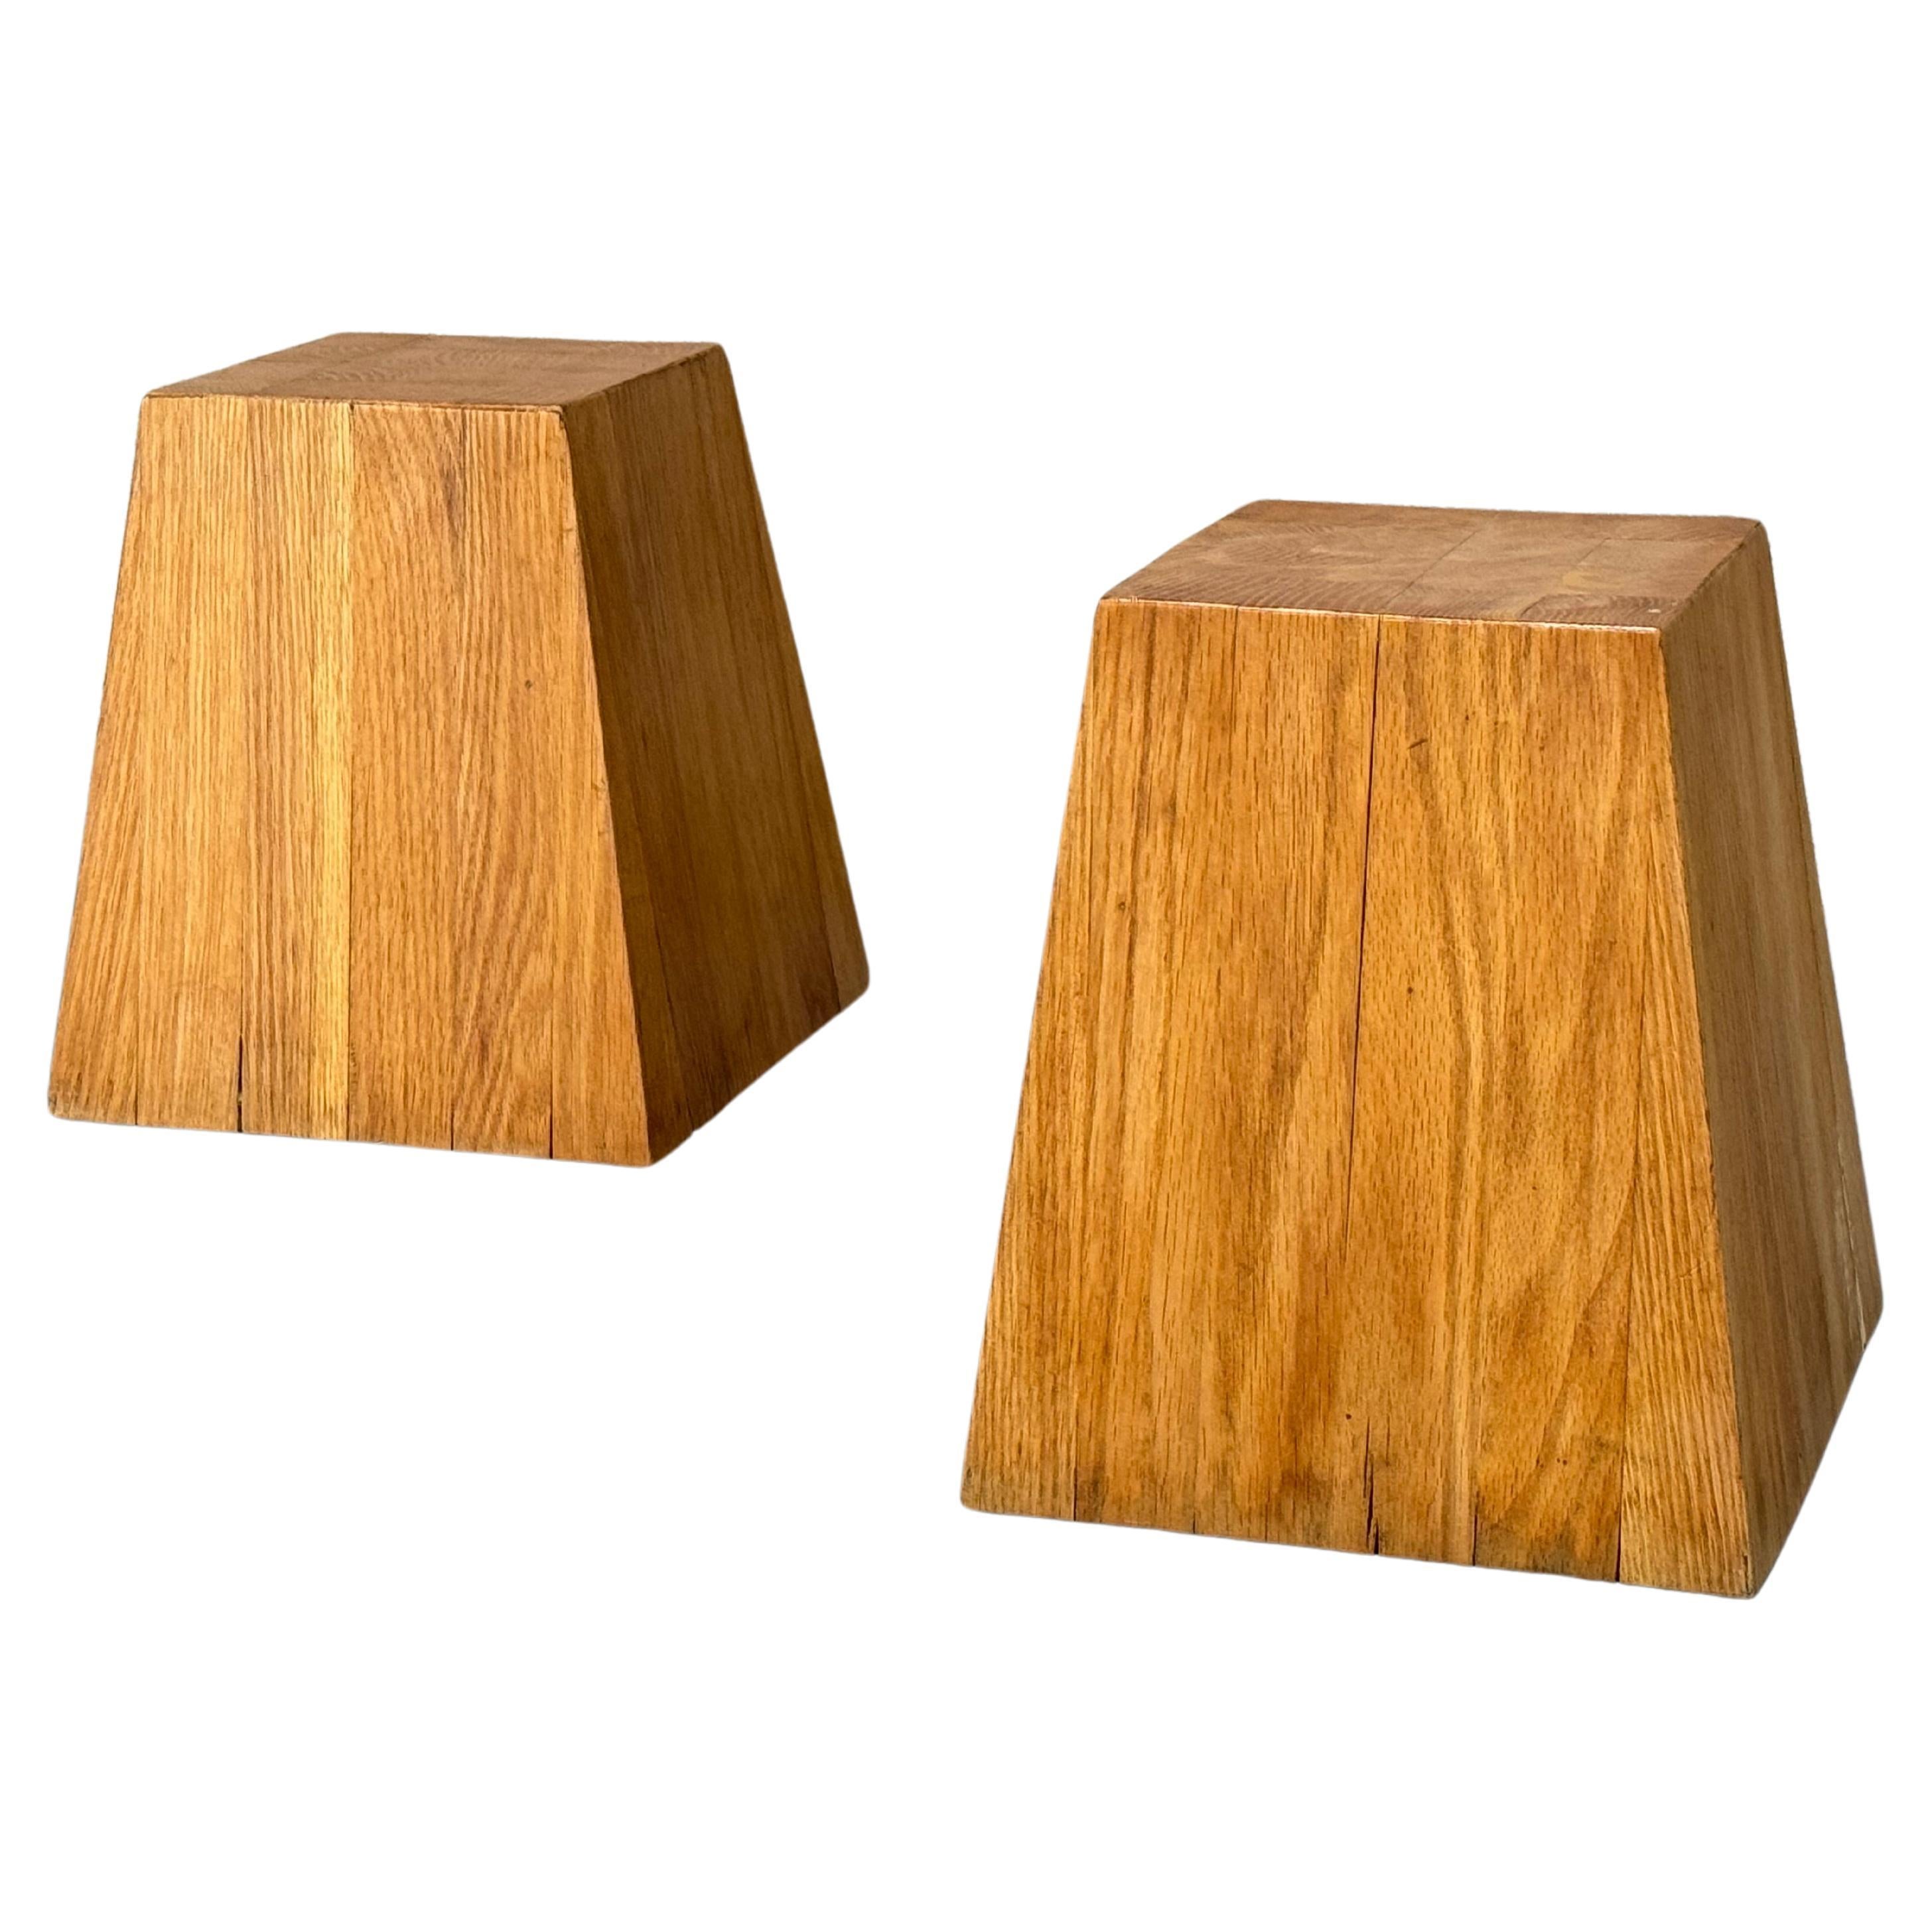 Solid Elm Side Tables / Pedestals from Denmark For Sale